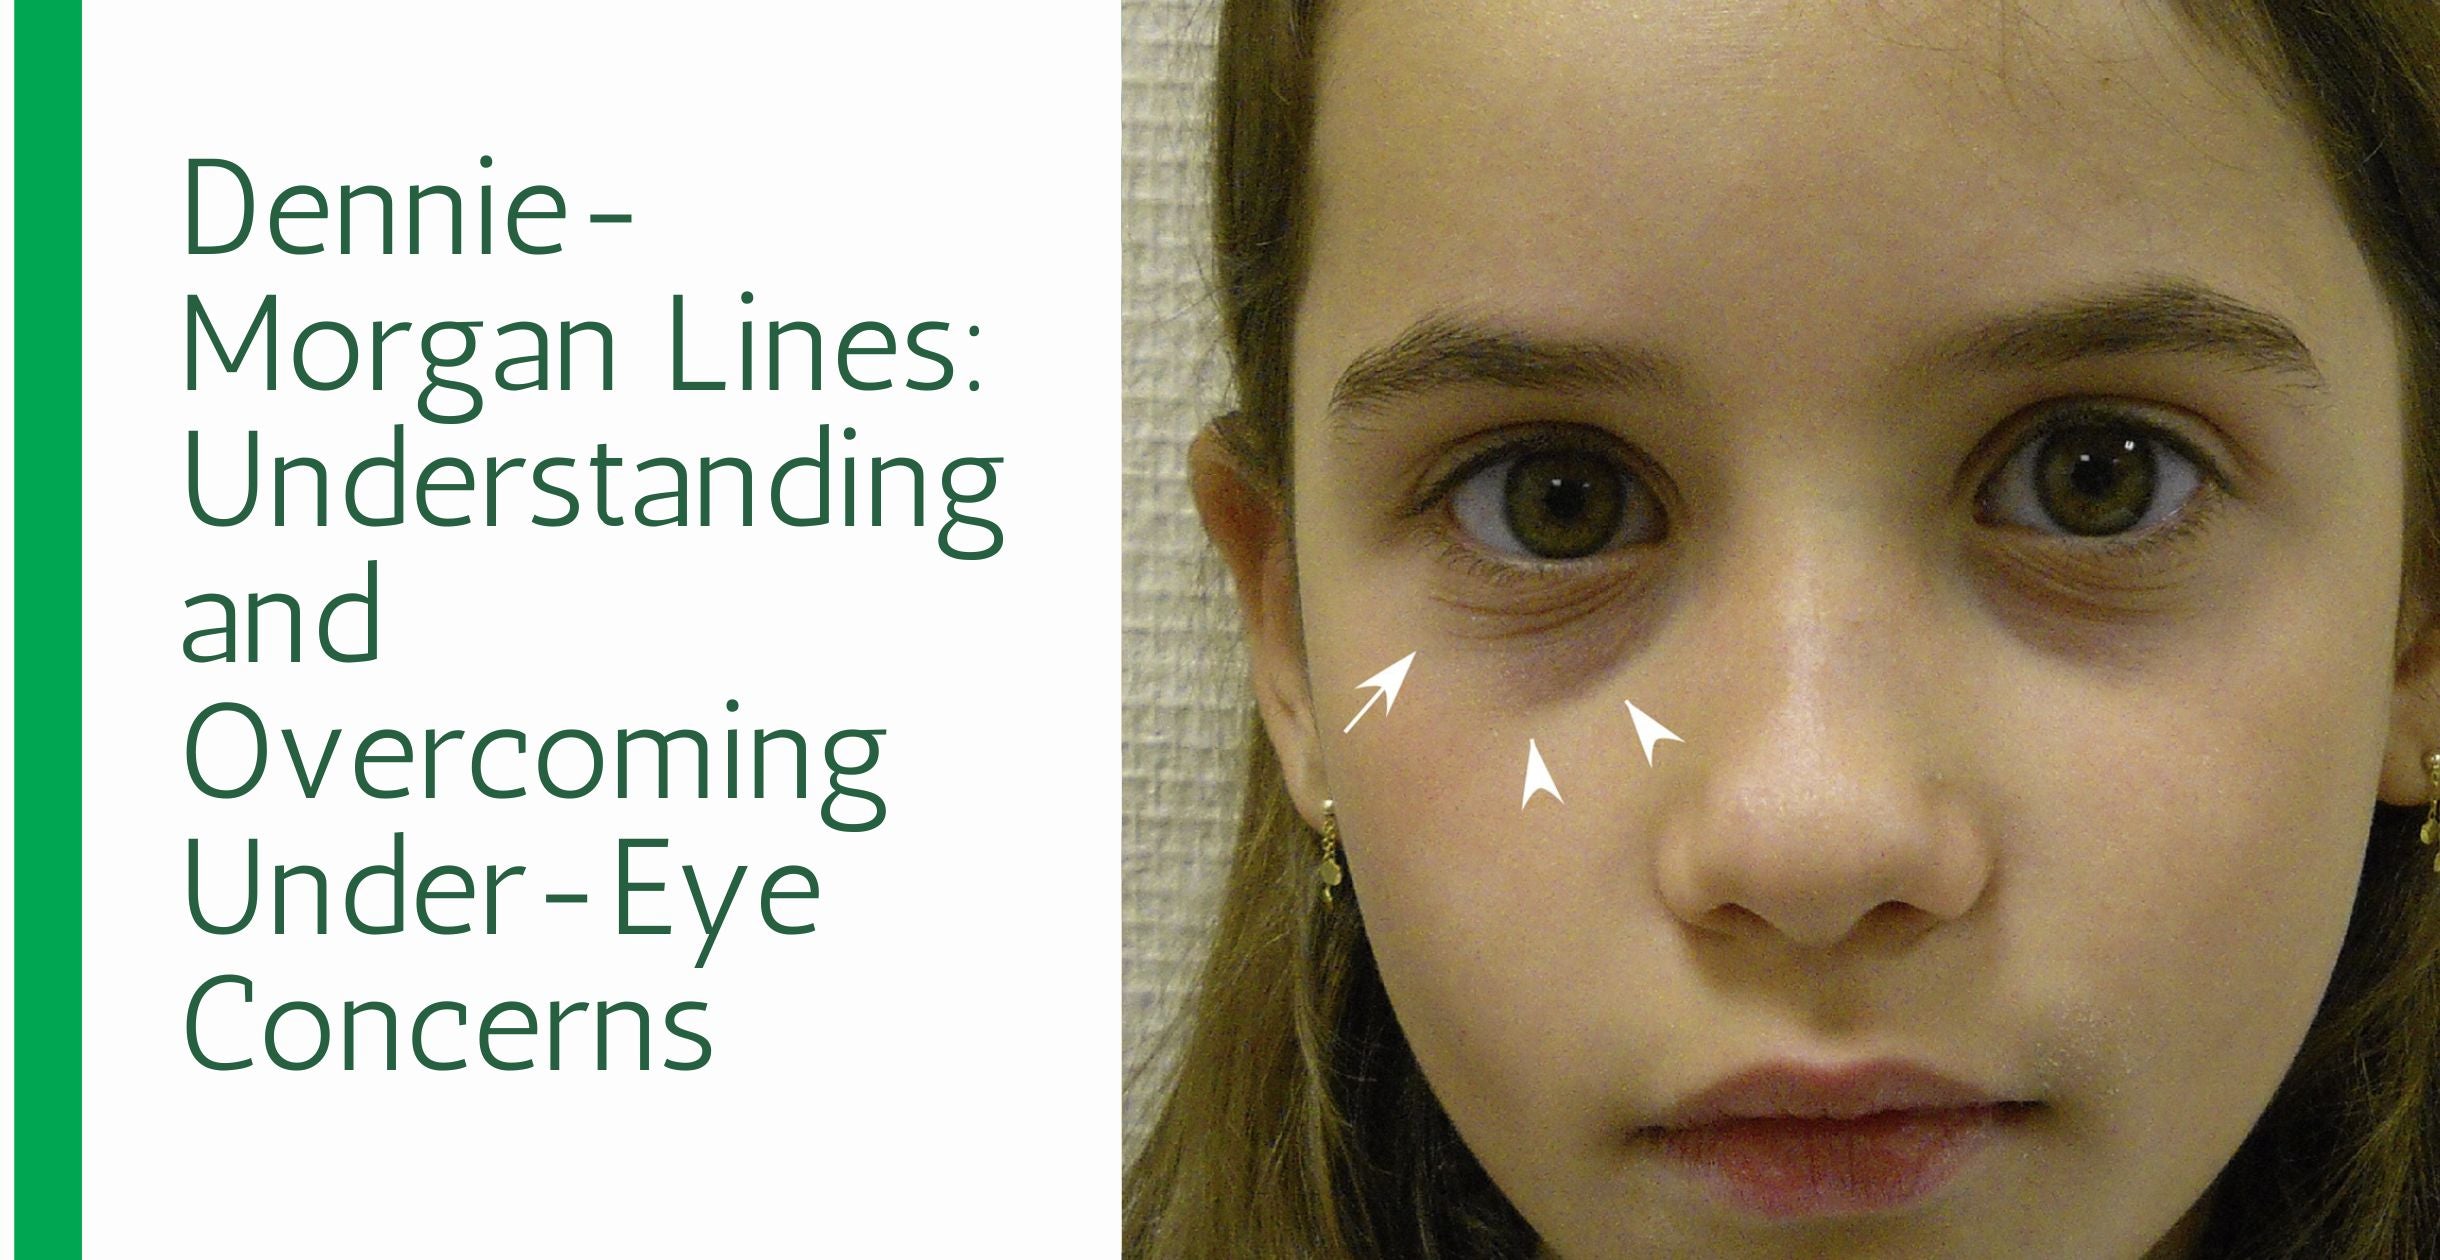 Dennie-Morgan Lines: Understanding and Overcoming Under-Eye Concerns